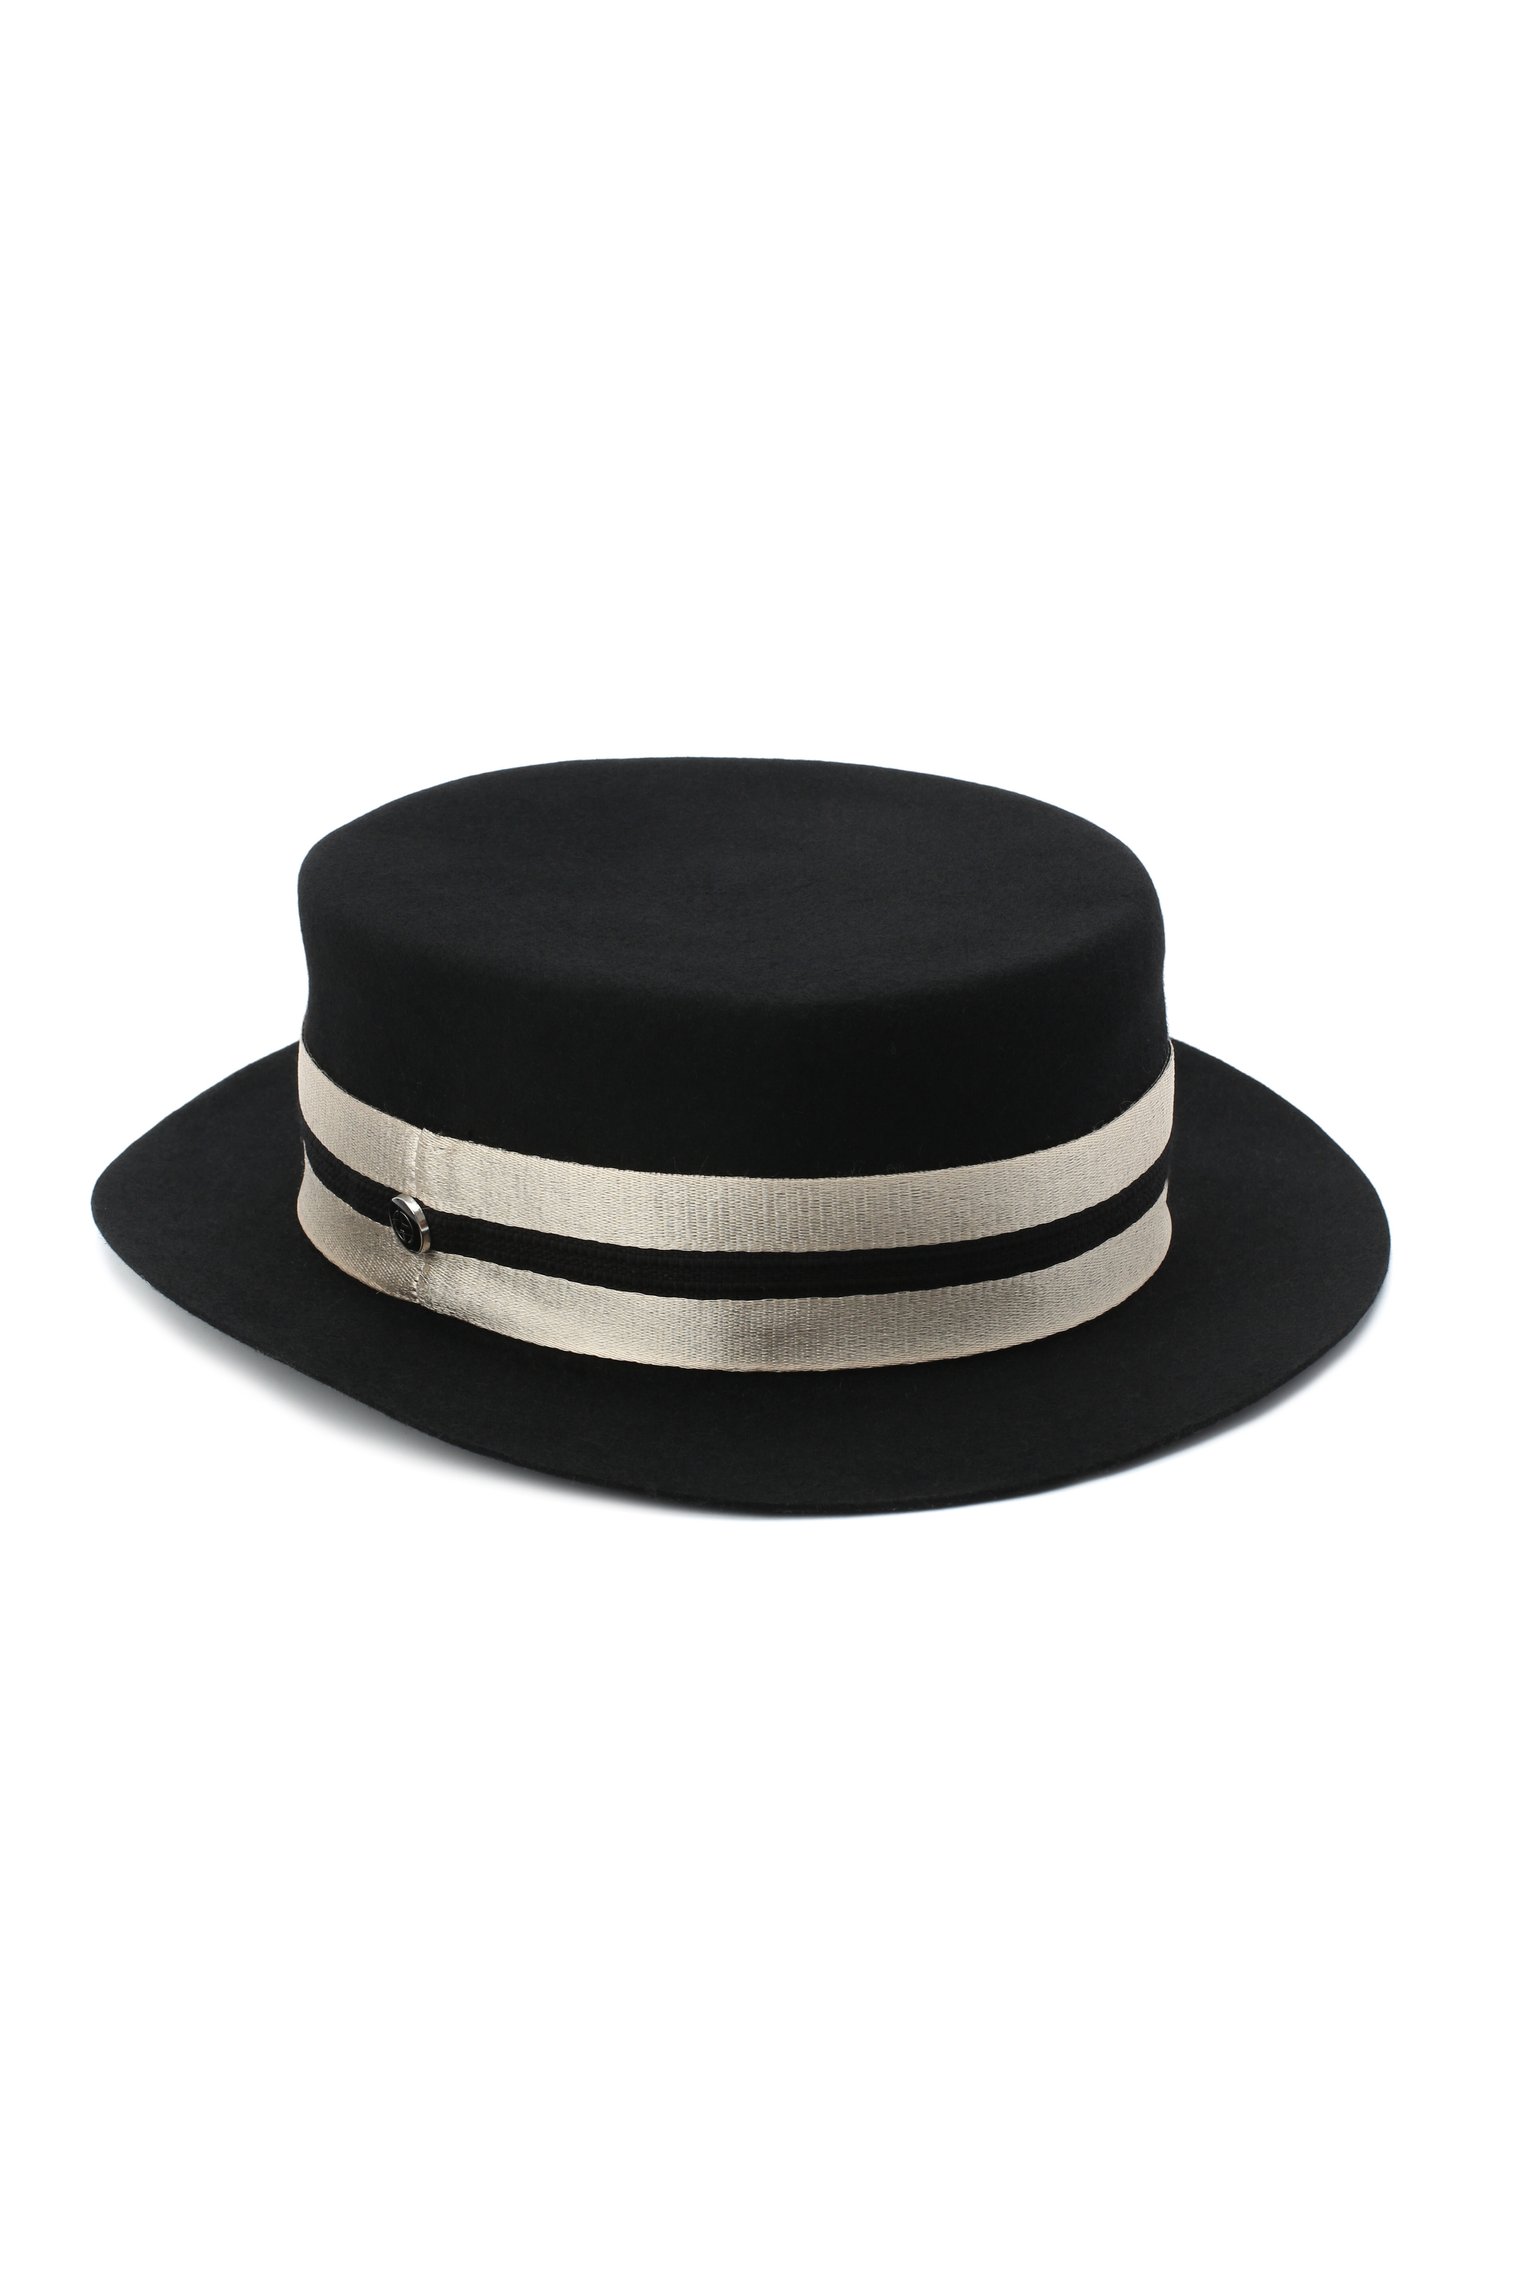 Шляпы Giorgio Armani, Фетровая шляпа Giorgio Armani, Италия, Чёрно-белый, Фетр/кролик/: 100%;, 11174130  - купить